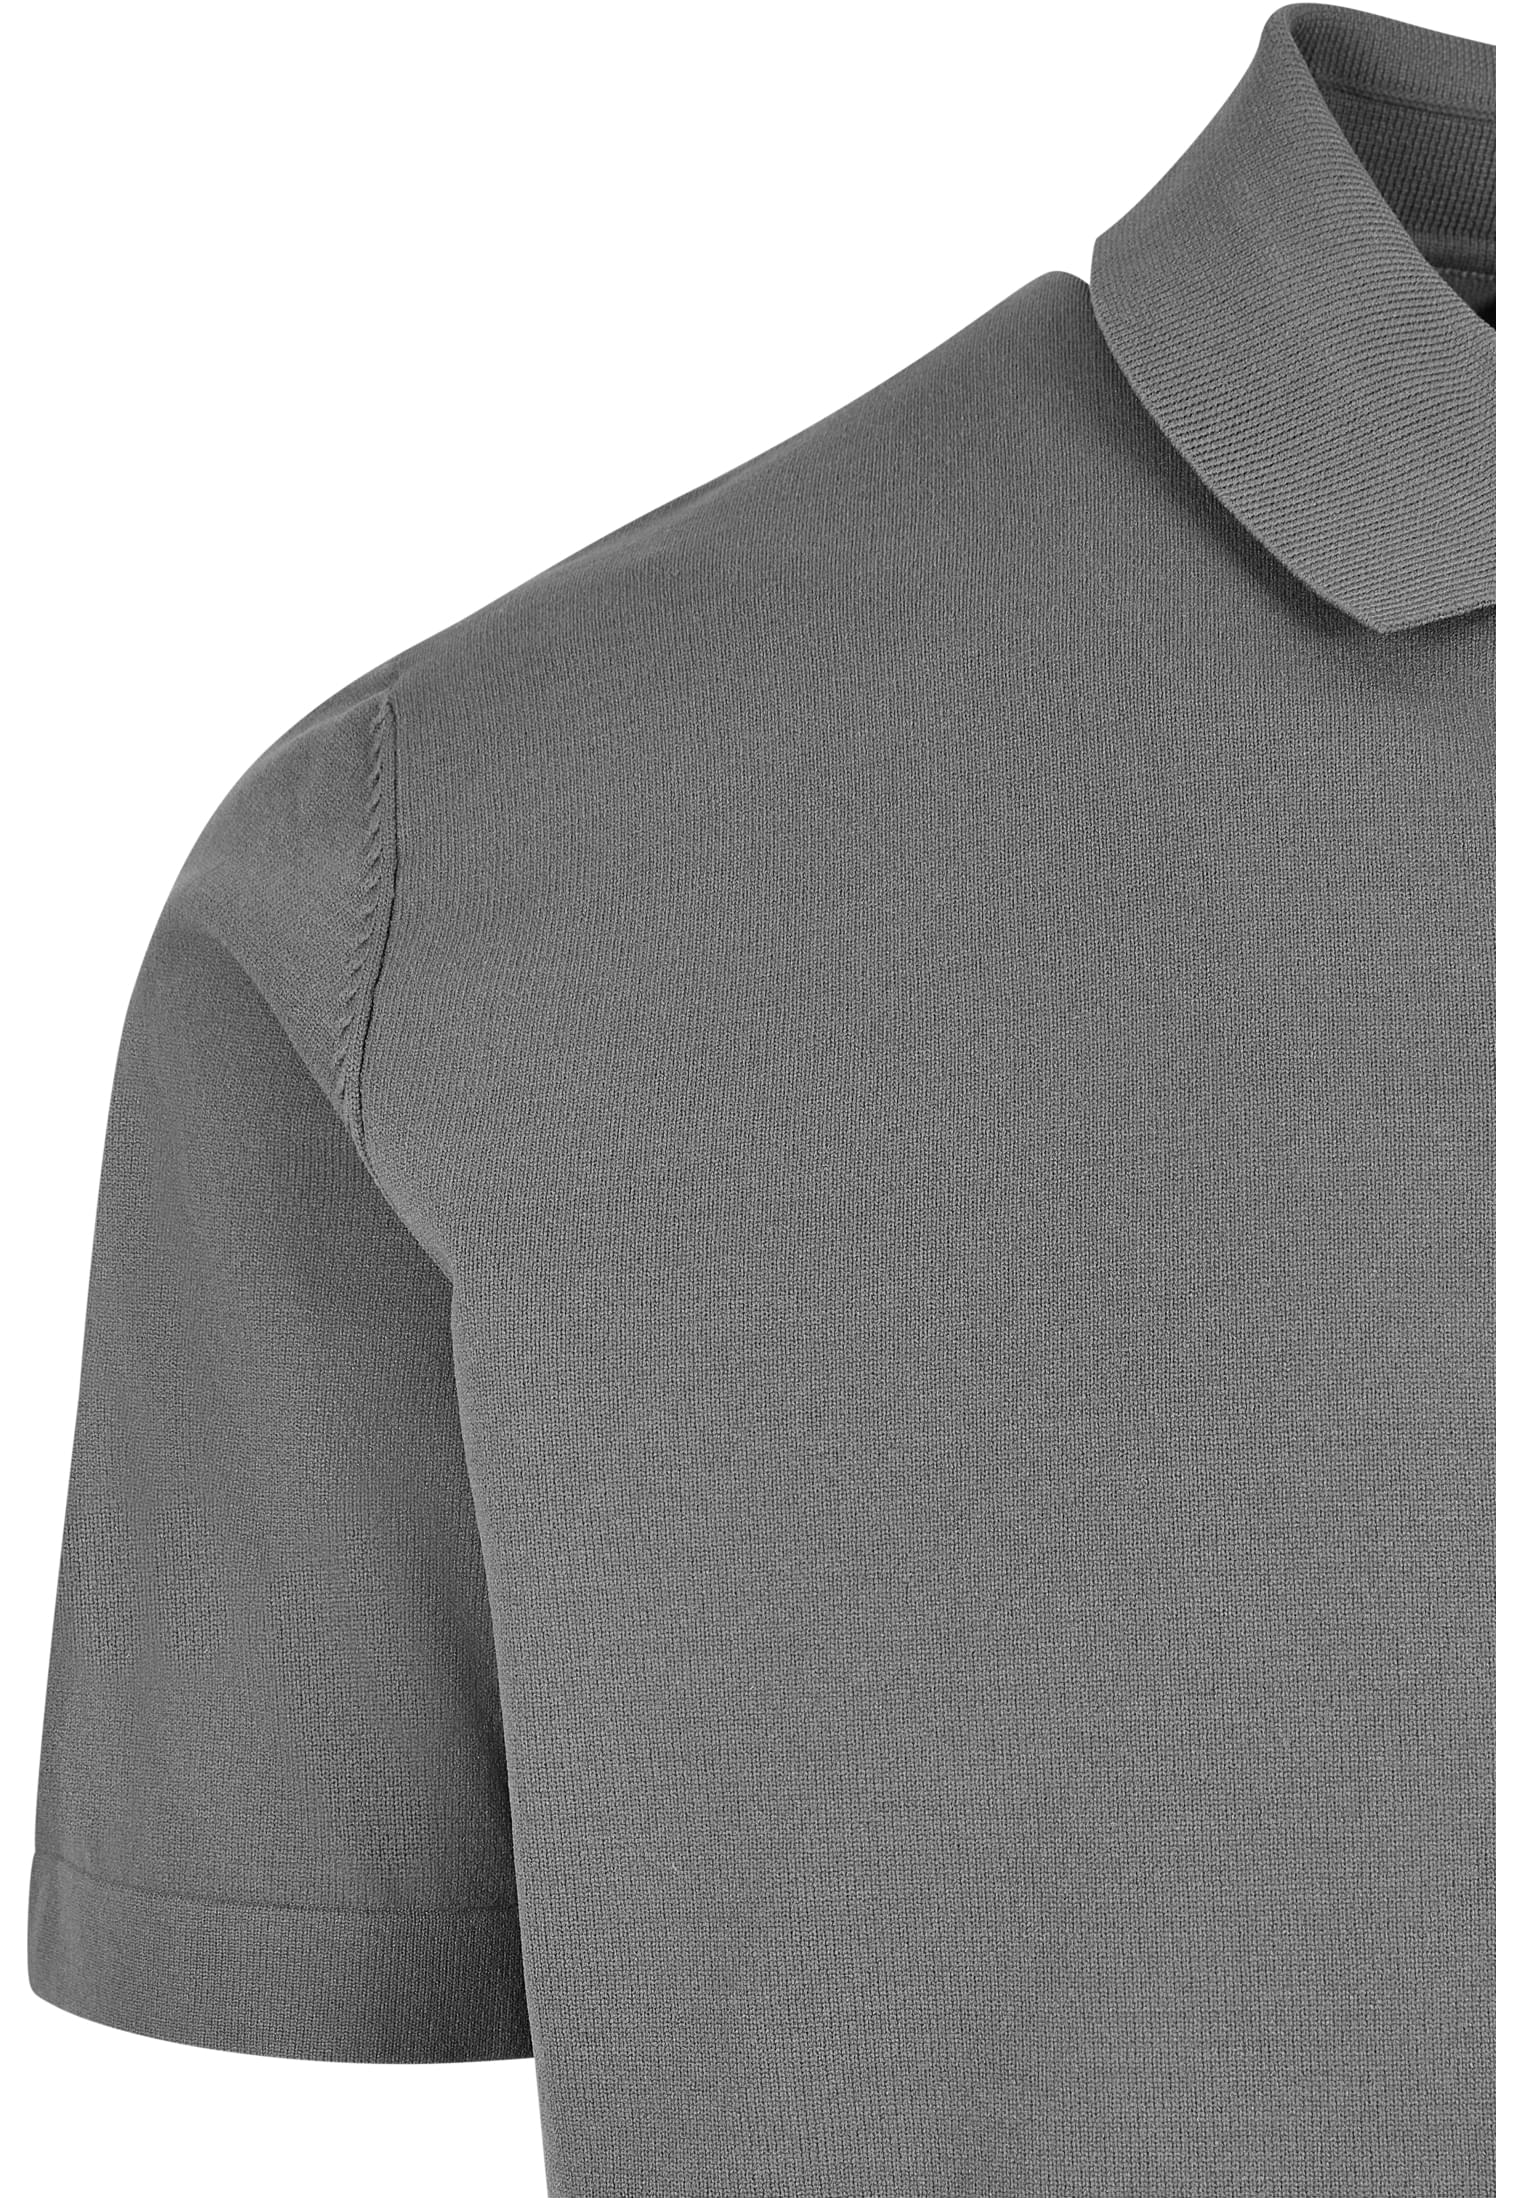 Hemden Knitted Shirt in Farbe darkshadow